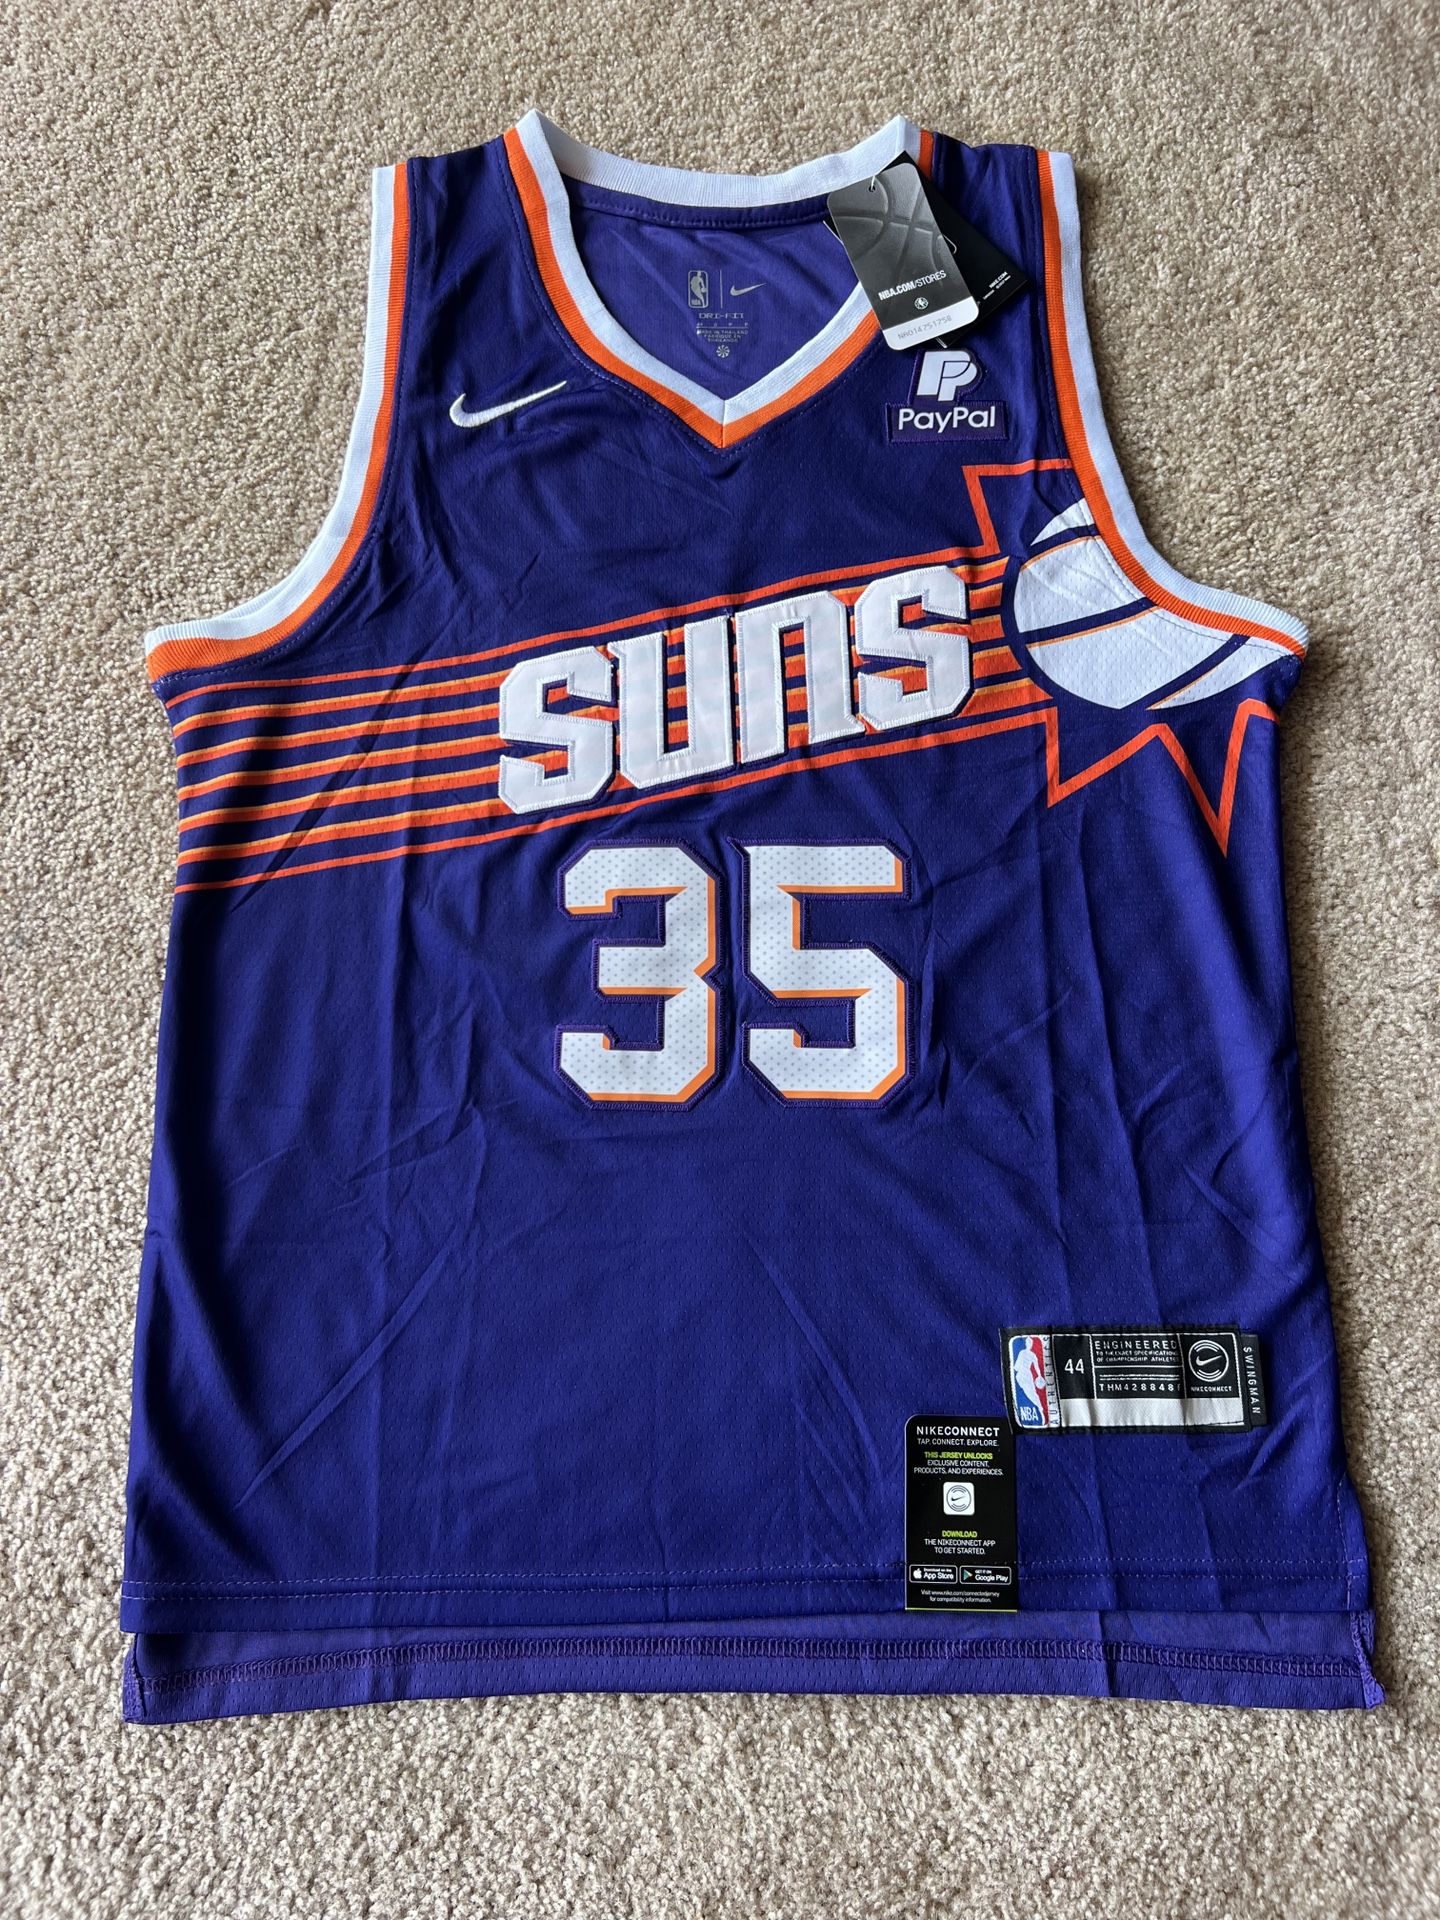 Phoenix suns jersey size XL,M,S 🏀